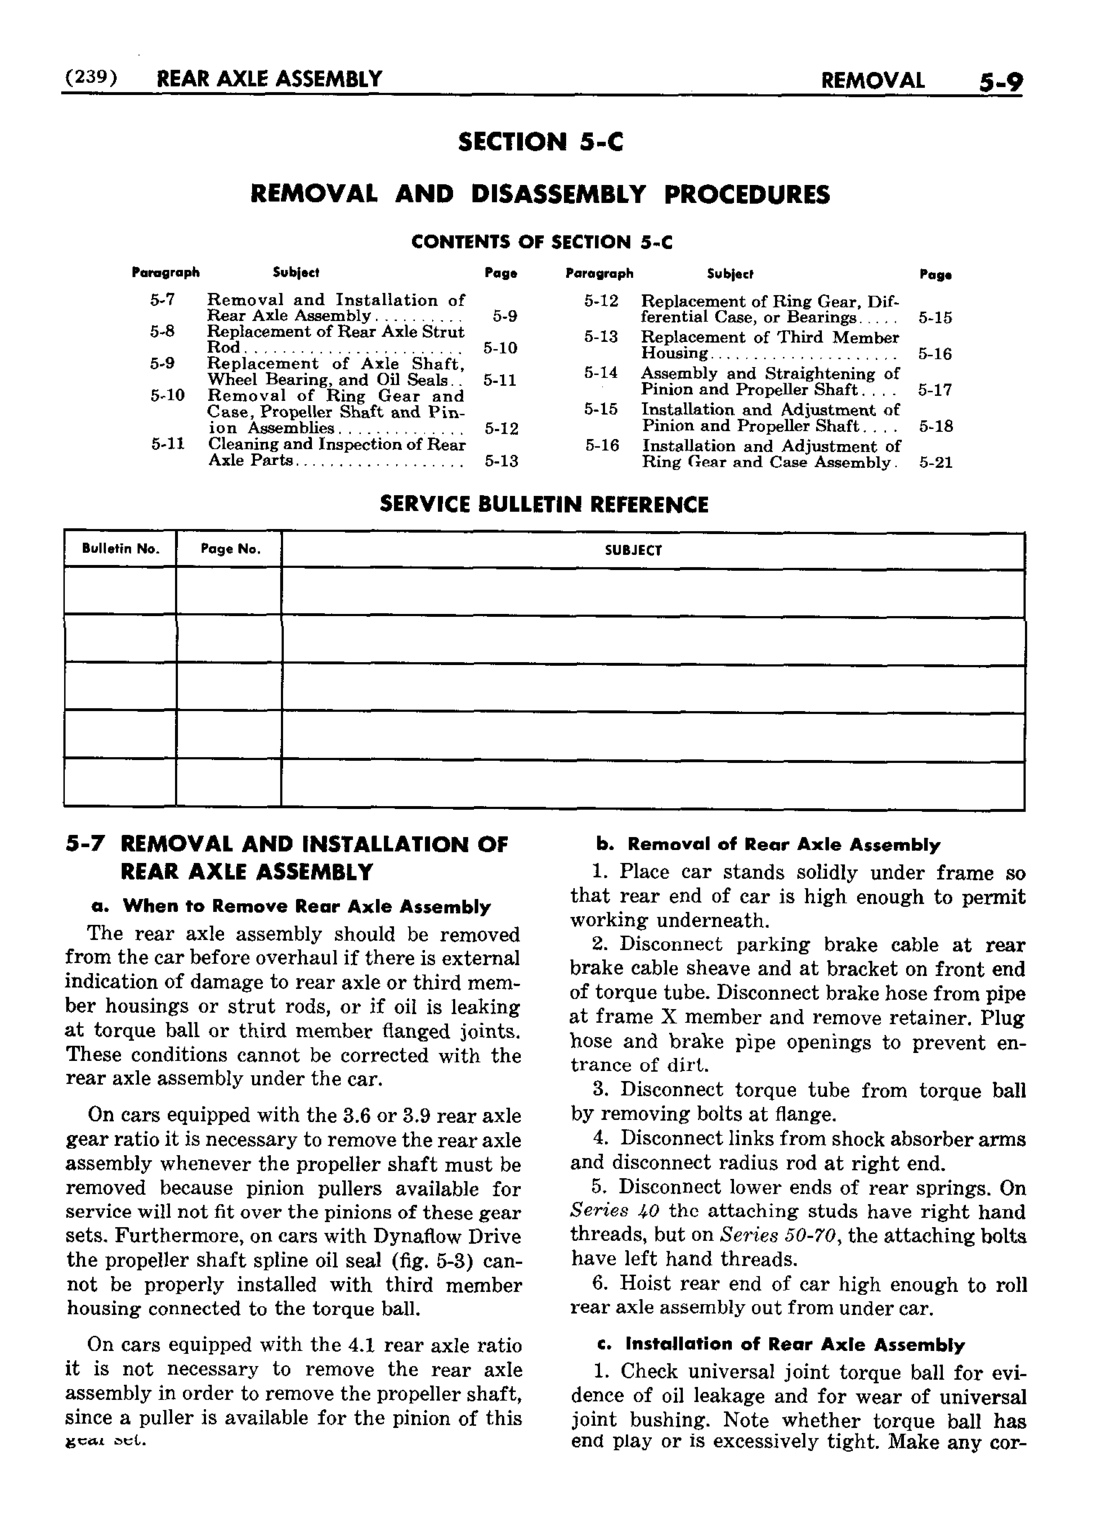 n_06 1952 Buick Shop Manual - Rear Axle-009-009.jpg